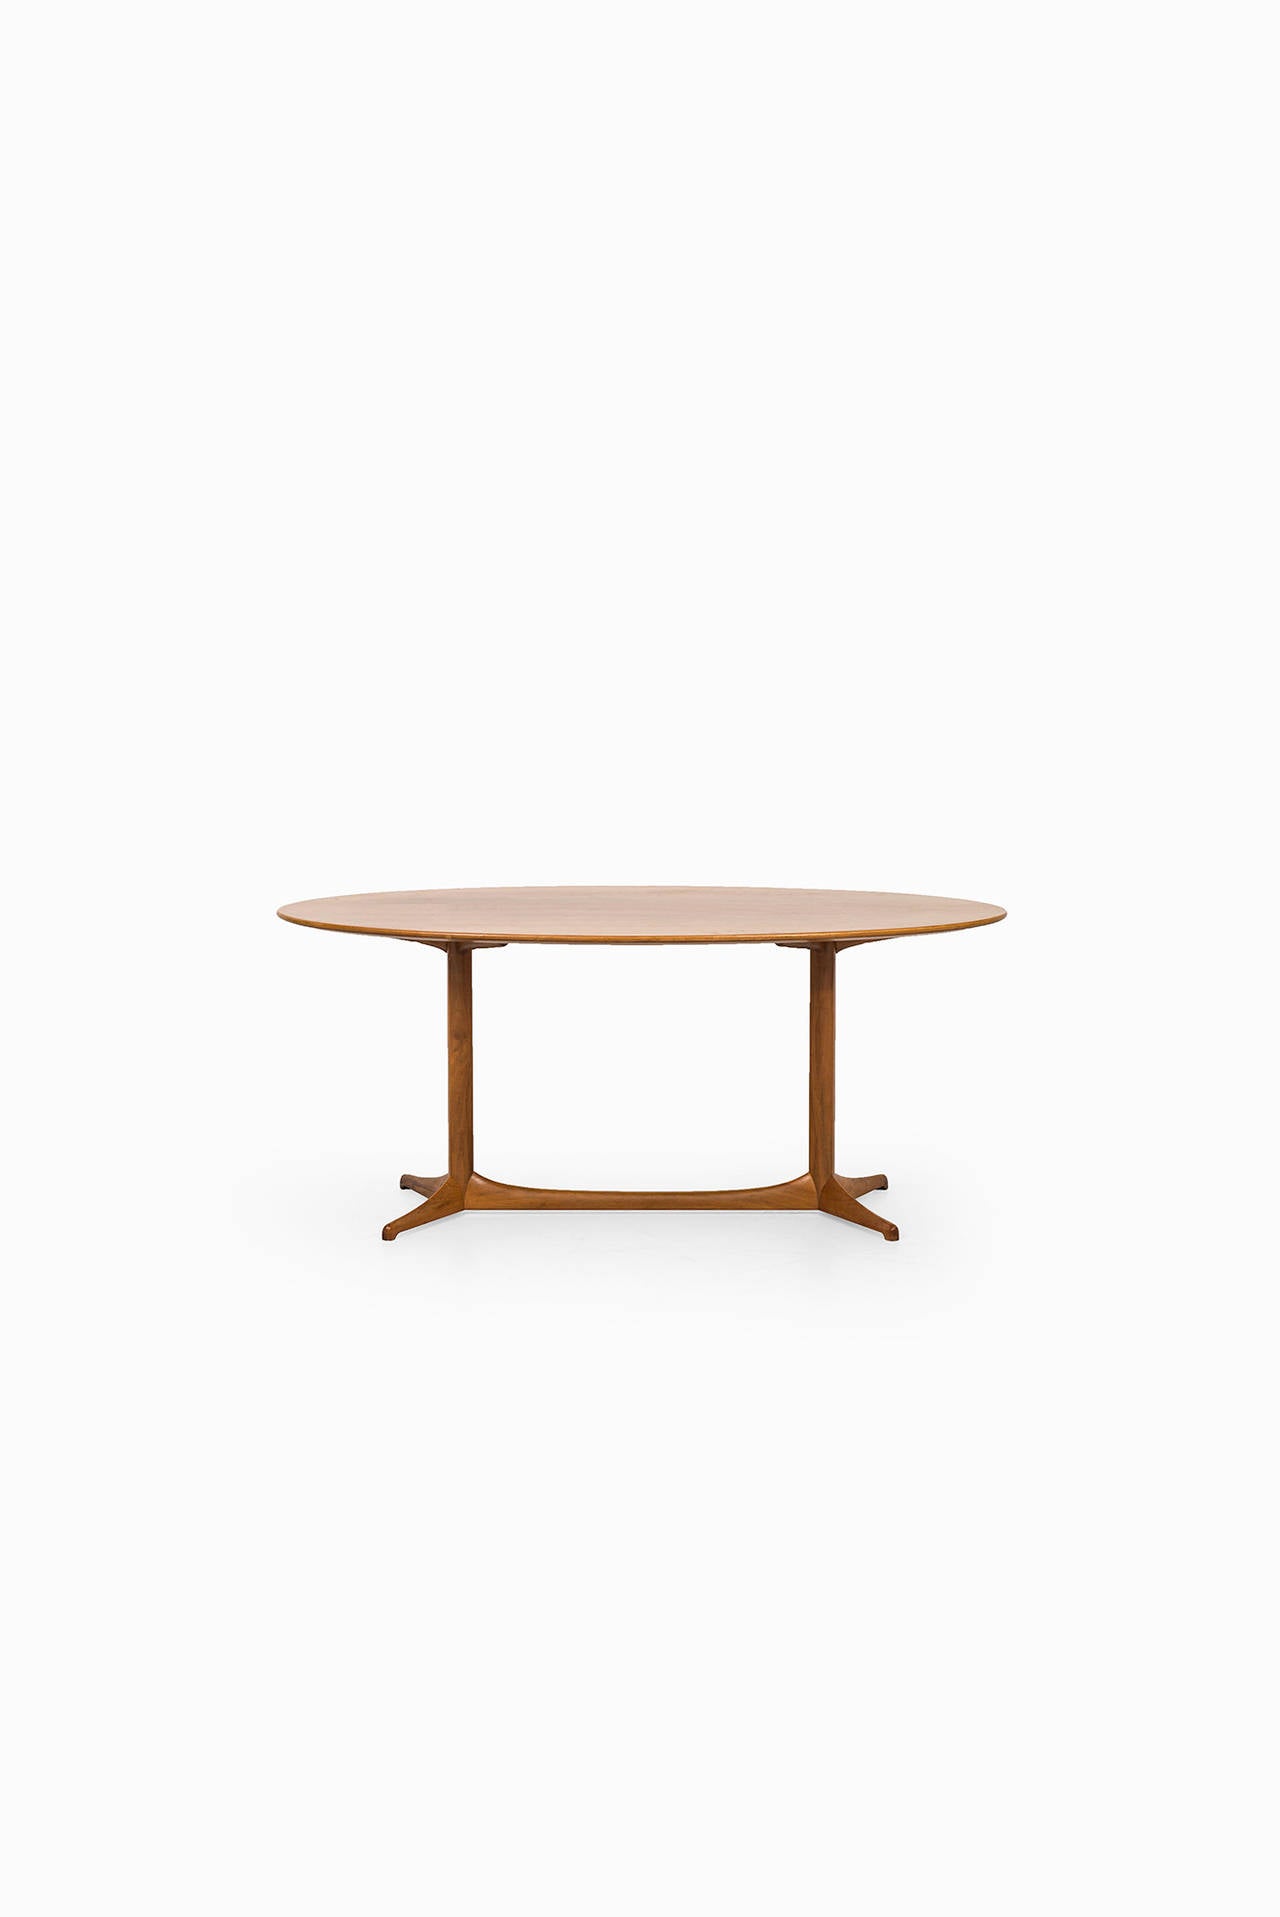 Coffee table model Plommonet designed by Kerstin Hörlin-Holmquist. Produced by Nordiska Kompaniet in Sweden.